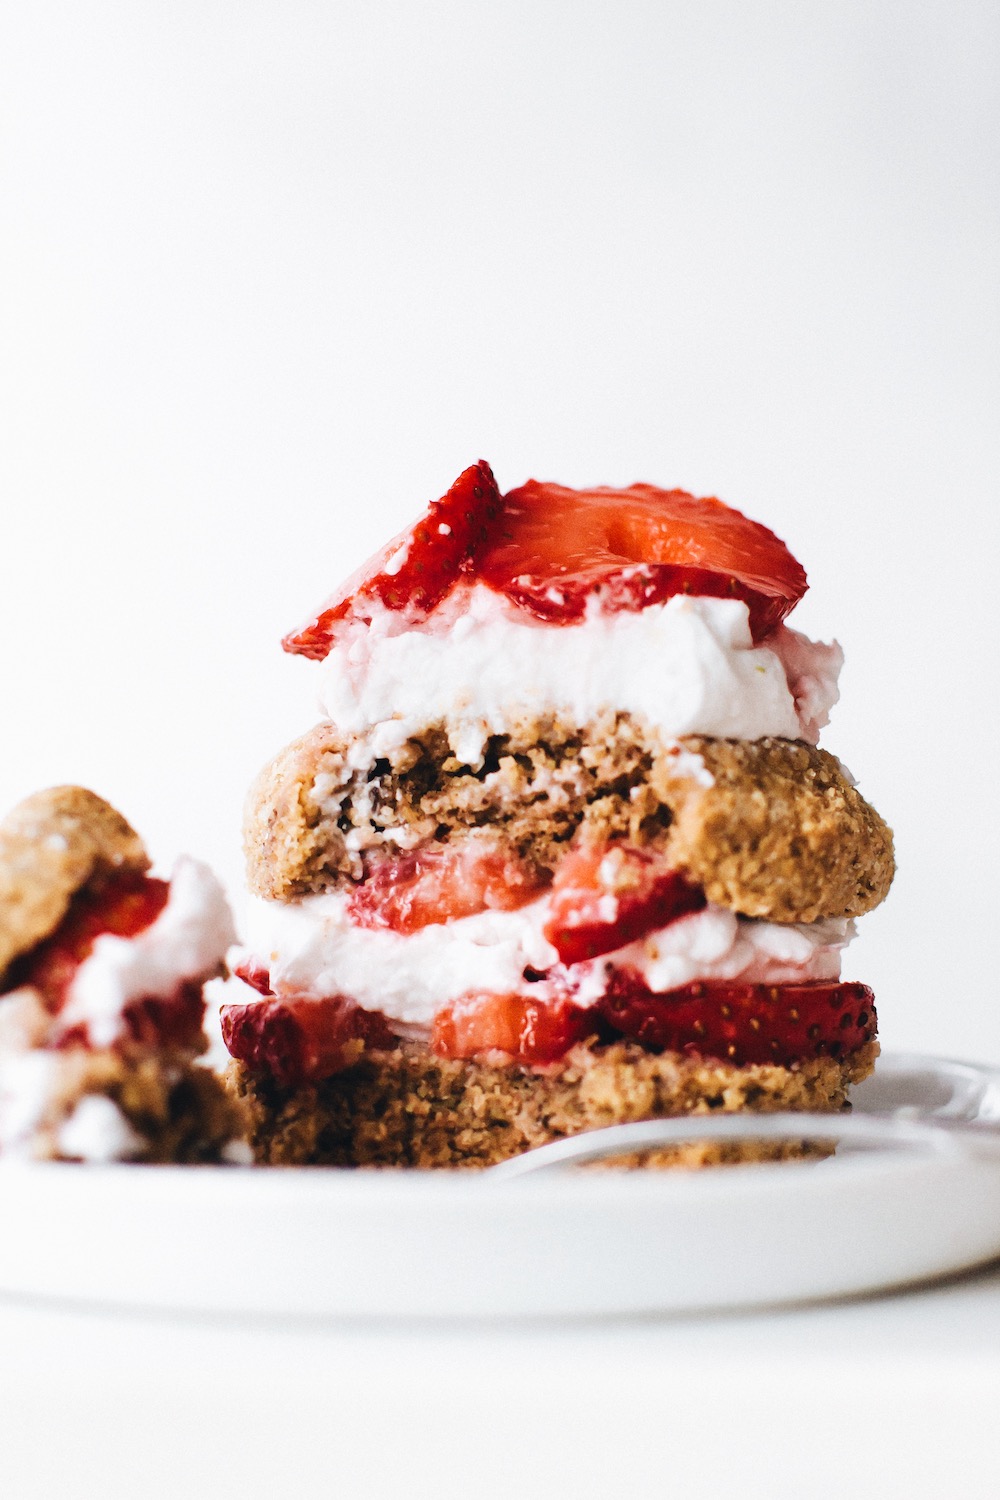 Vegan Strawberry Shortcake (Gluten-Free + Oil-Free)